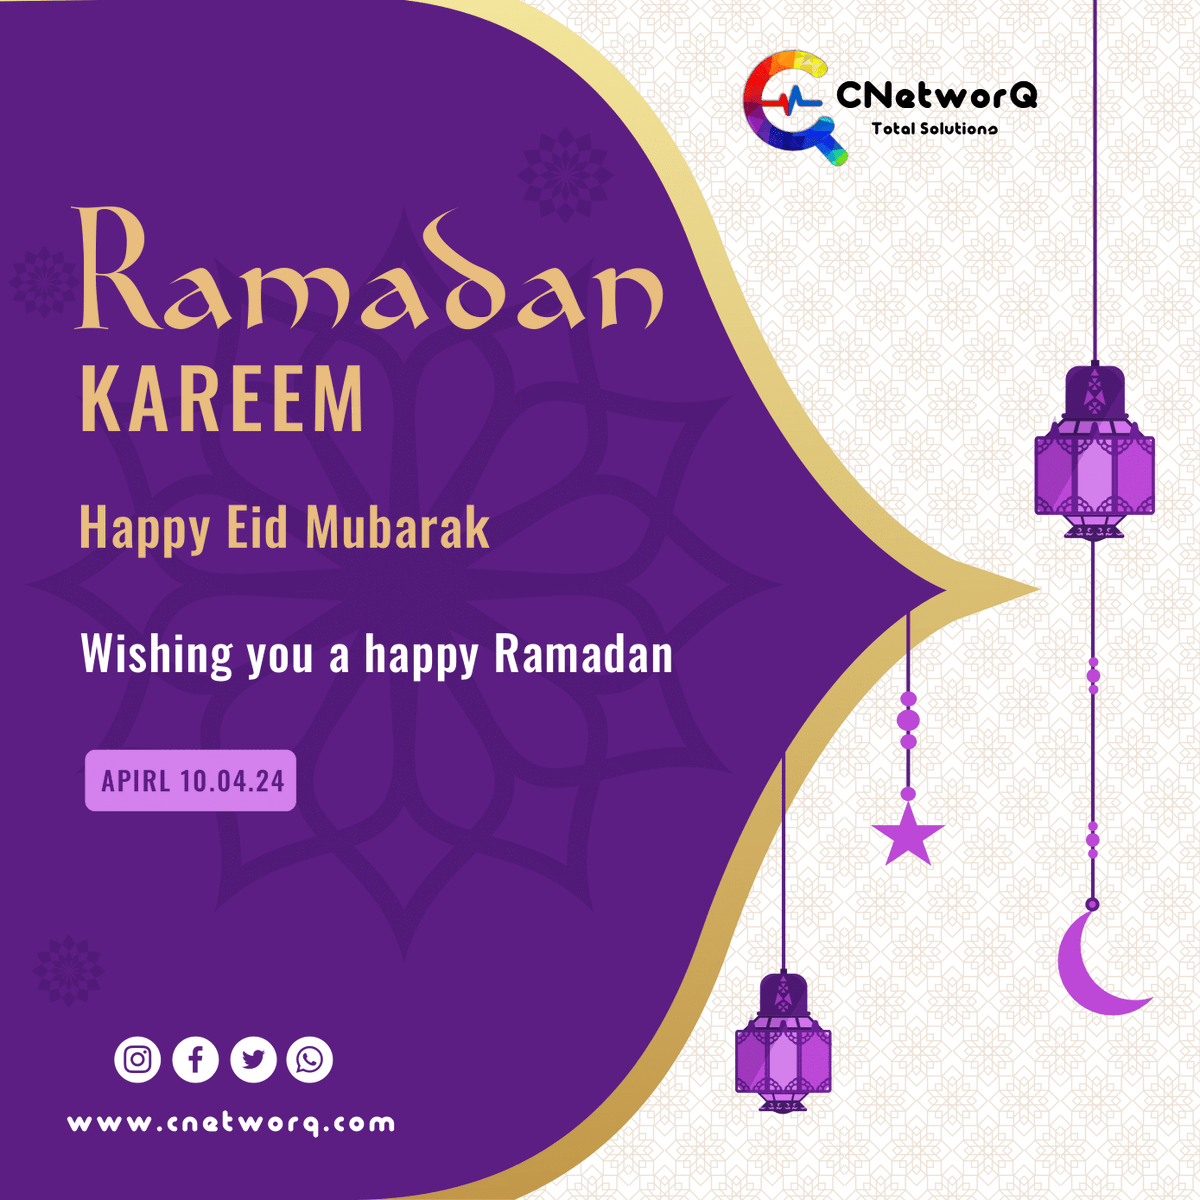 Wishing you a Ramadan filled with love, laughter, and light. ✨
Ramadan Mubarak!

#CNetworQTotalSolutions #RamadanBlessings #RamadanKaree #RamadanVibes #RamadanSpirit #CNetworQRamadan #JoyfulRamadan #LightAndLove #BlessedMoments #RamadanWishes #PeacefulRamadan